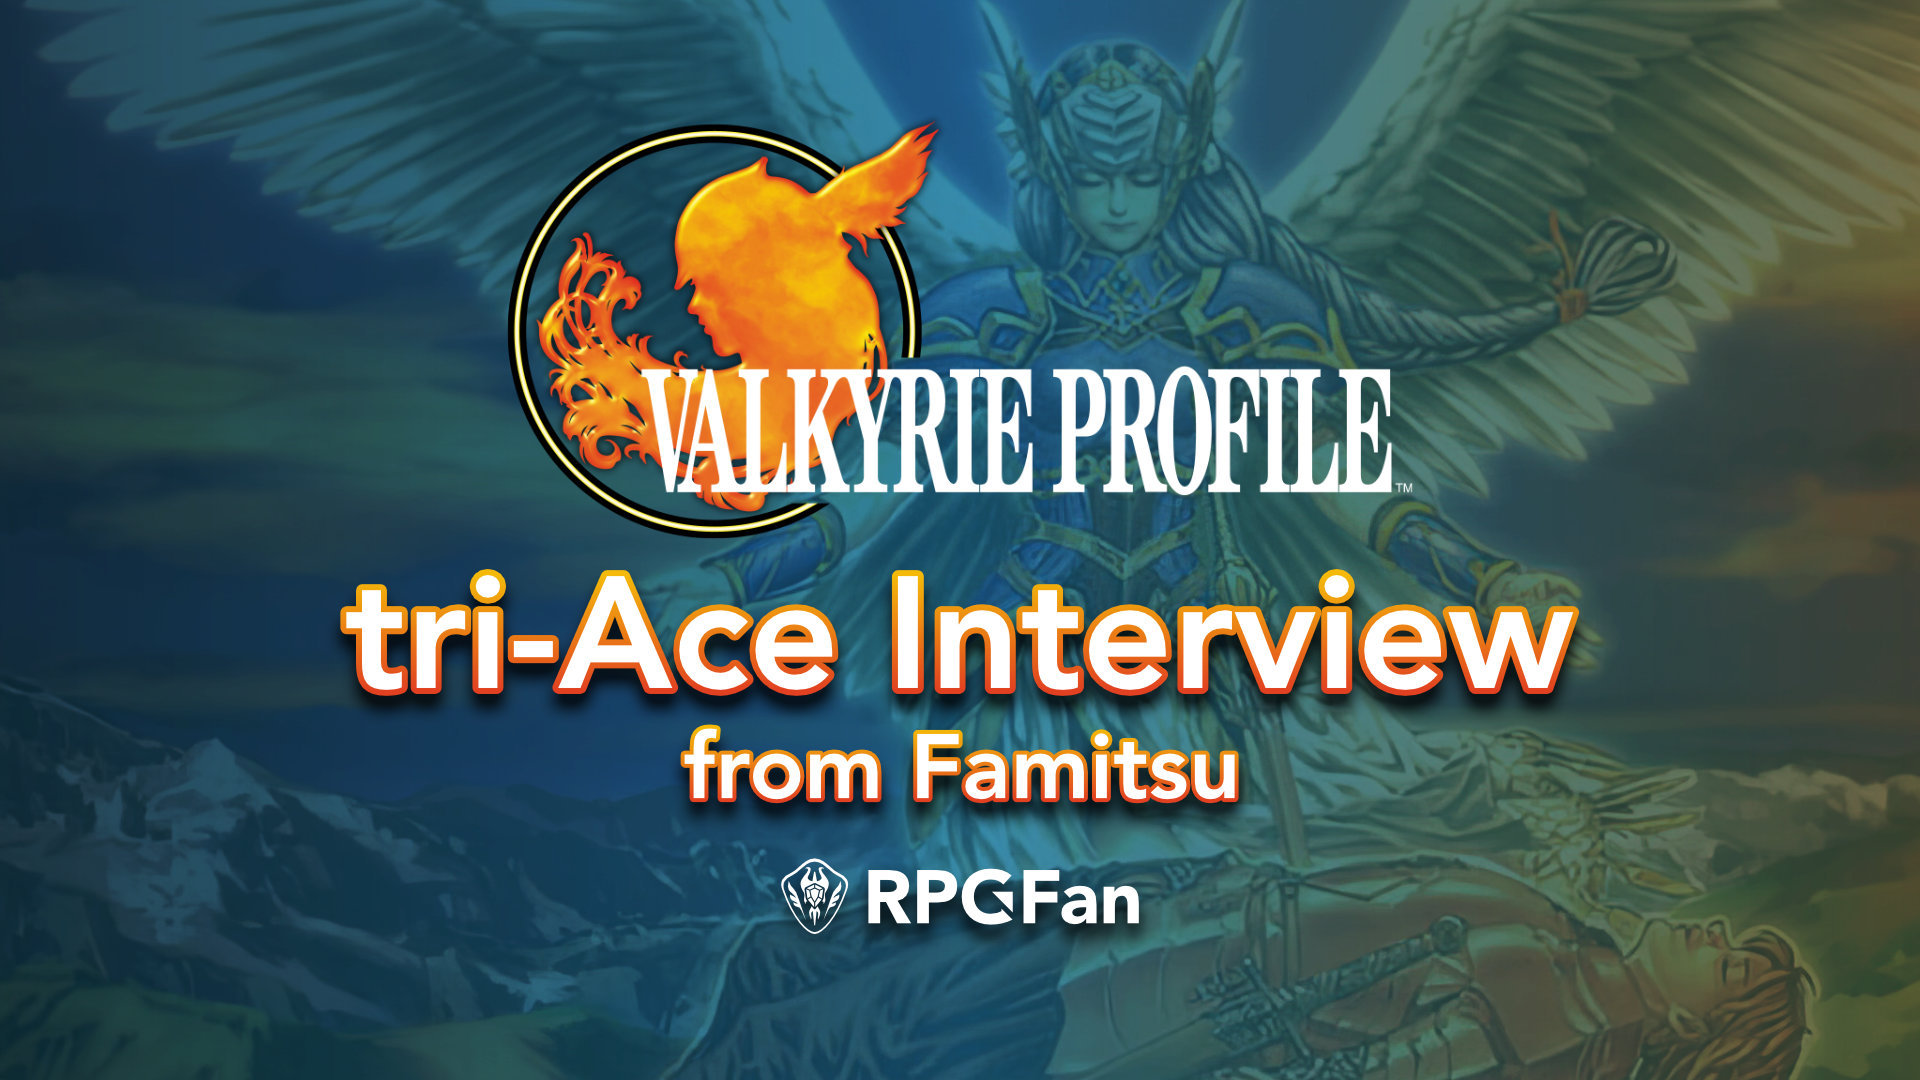 tri-Ace Interview on Valkyrie Profile - Famitsu Translation